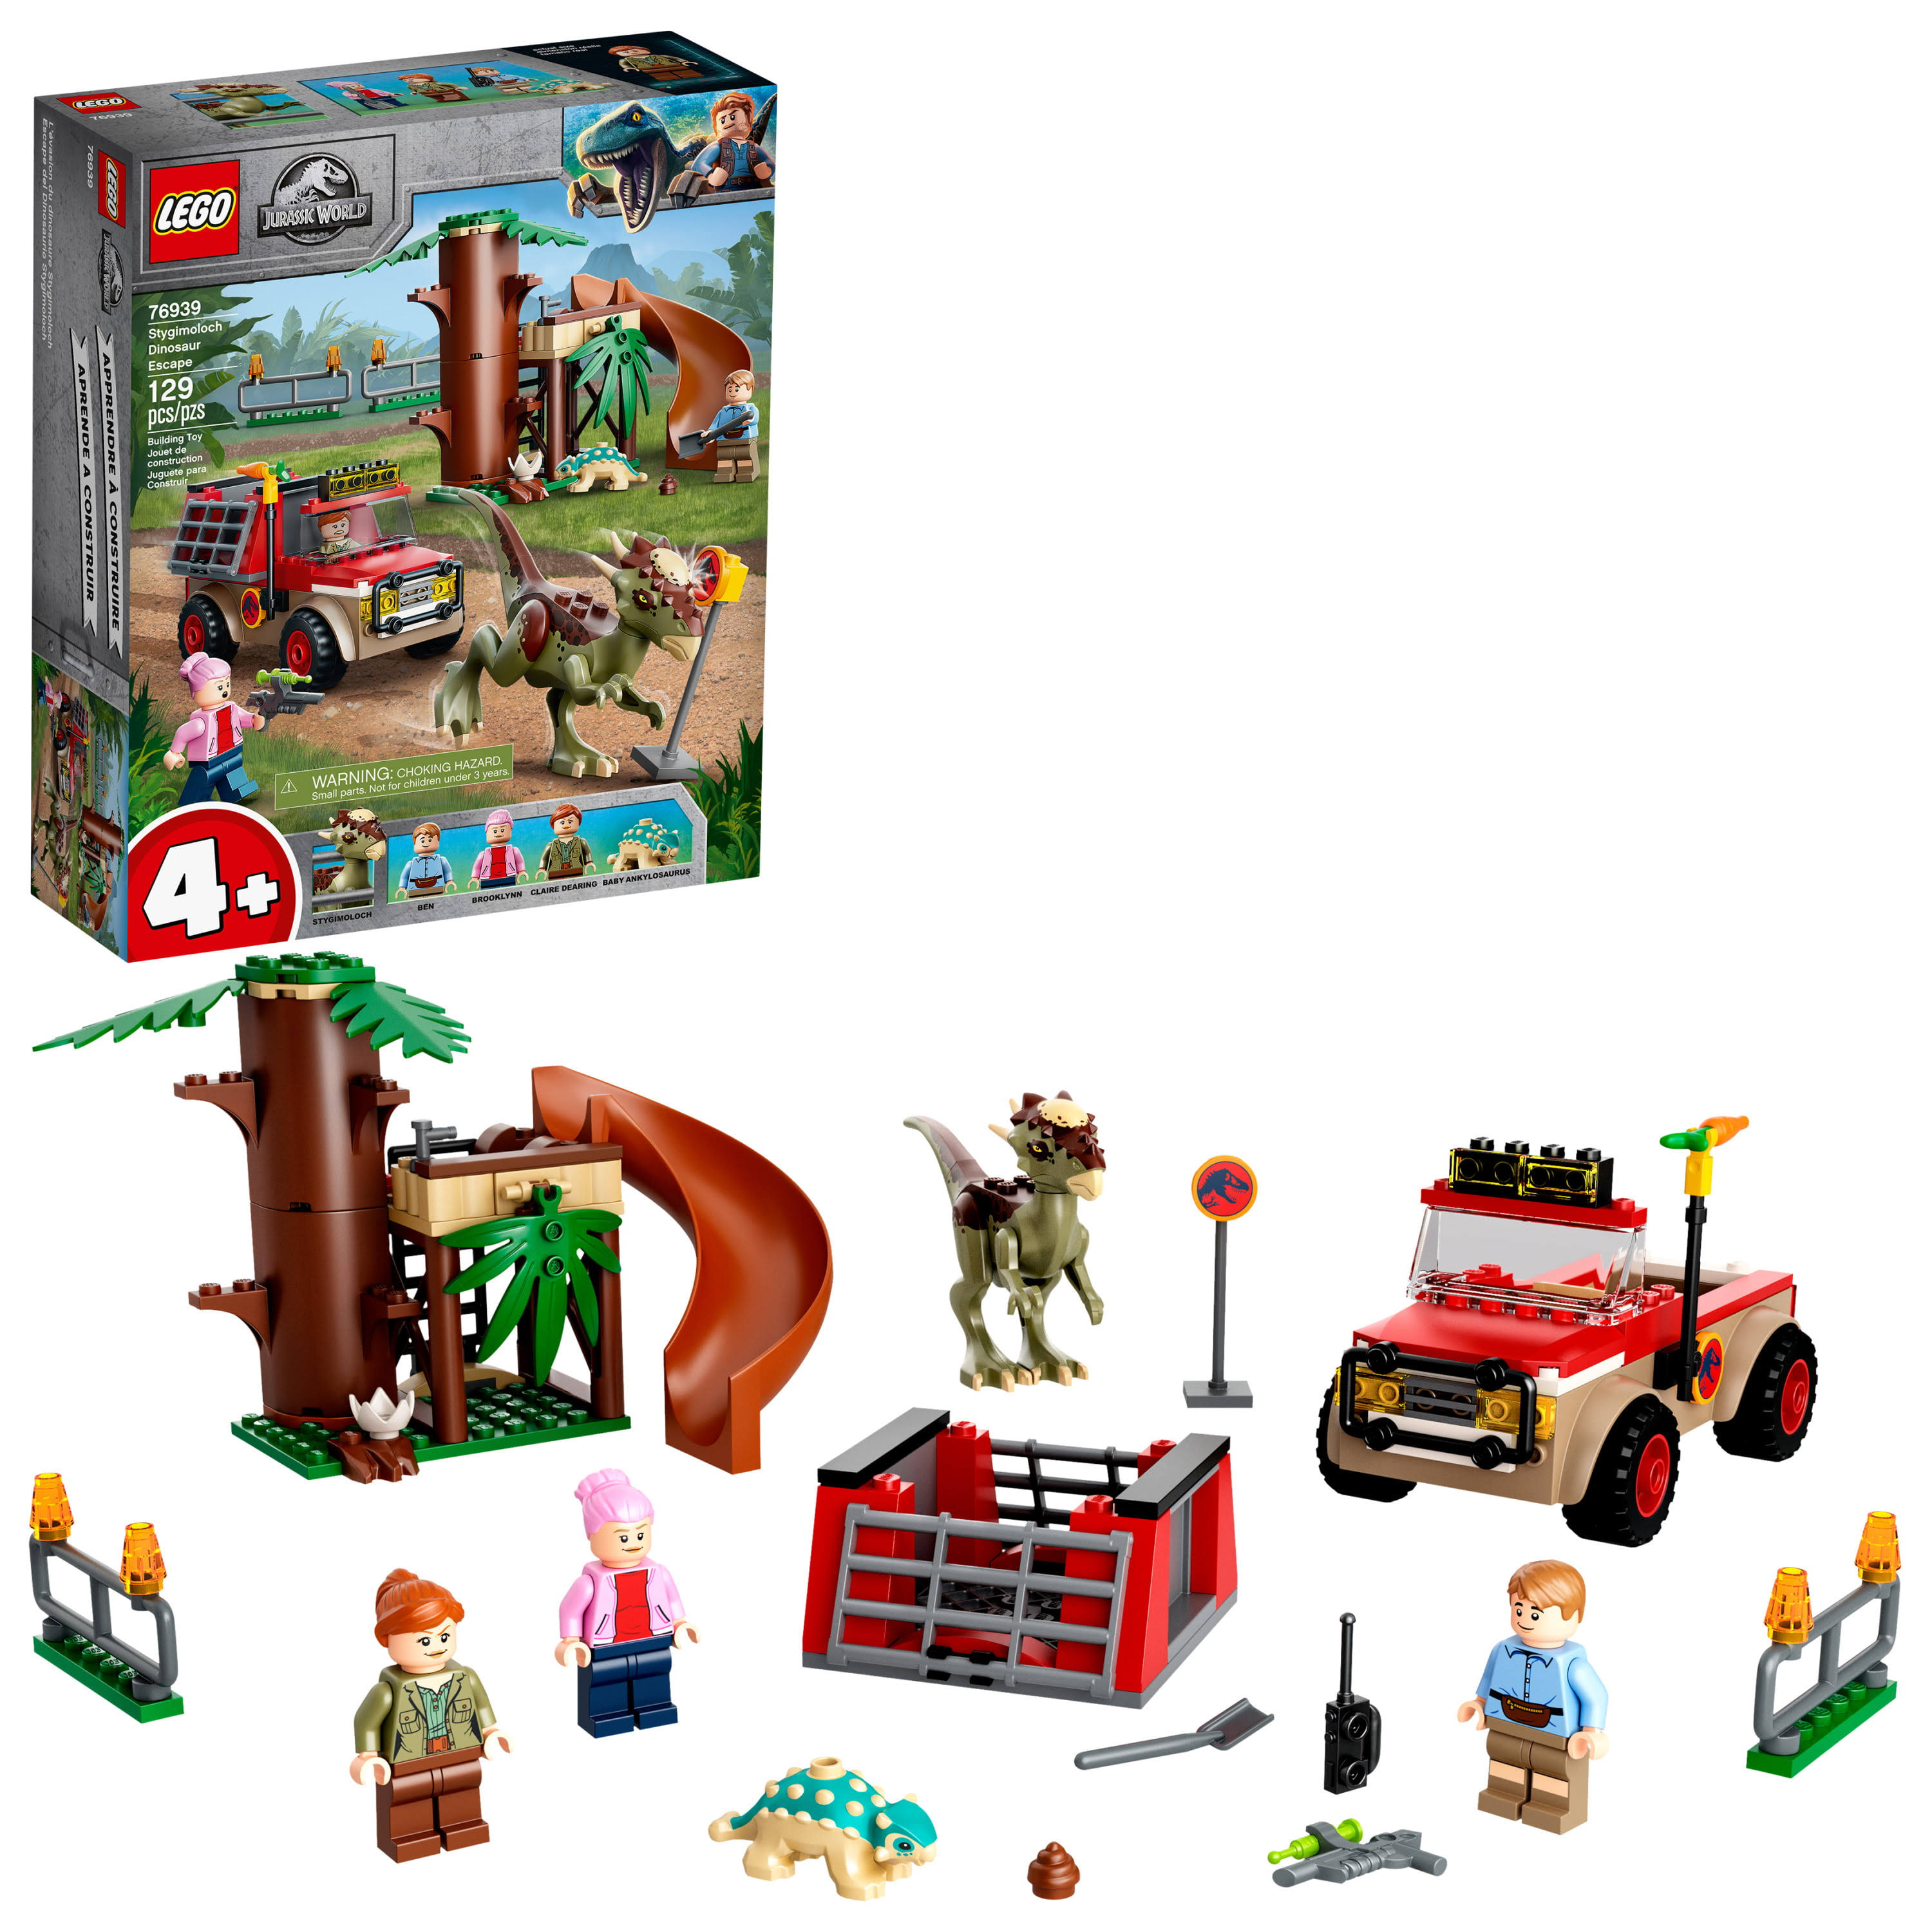 Lego jurassic world 76939 stygimoloch dinosaur escape 129 piece building kit